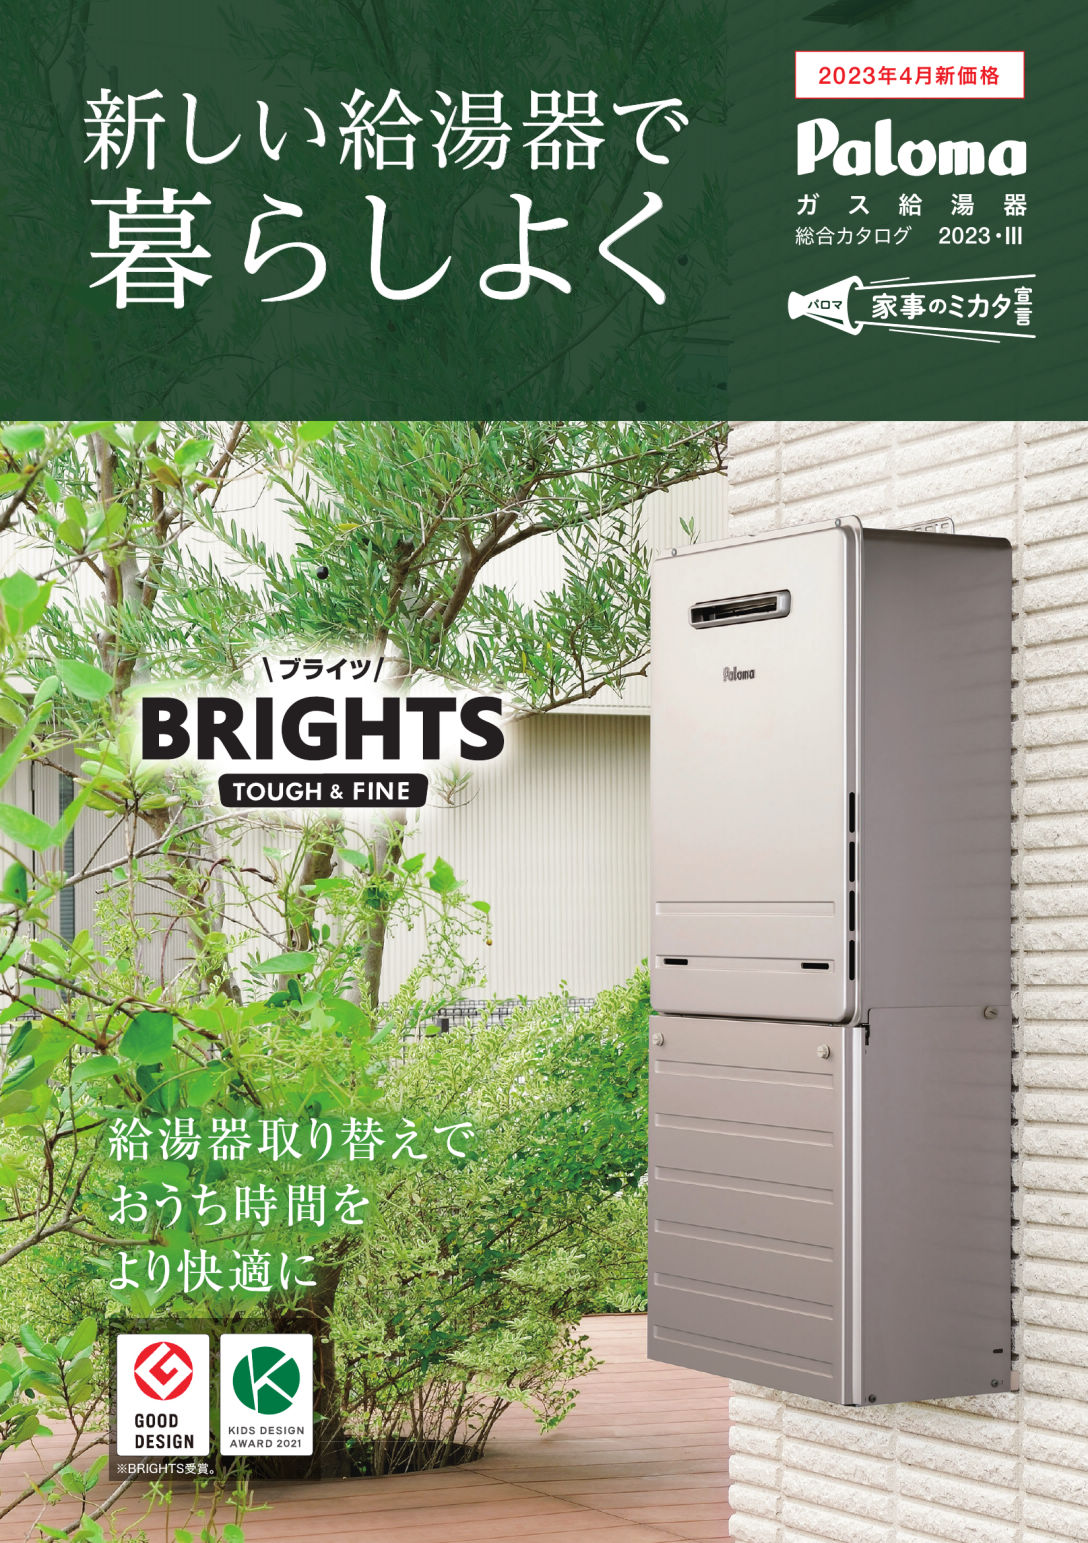 Gas Water Heater – Japanese version